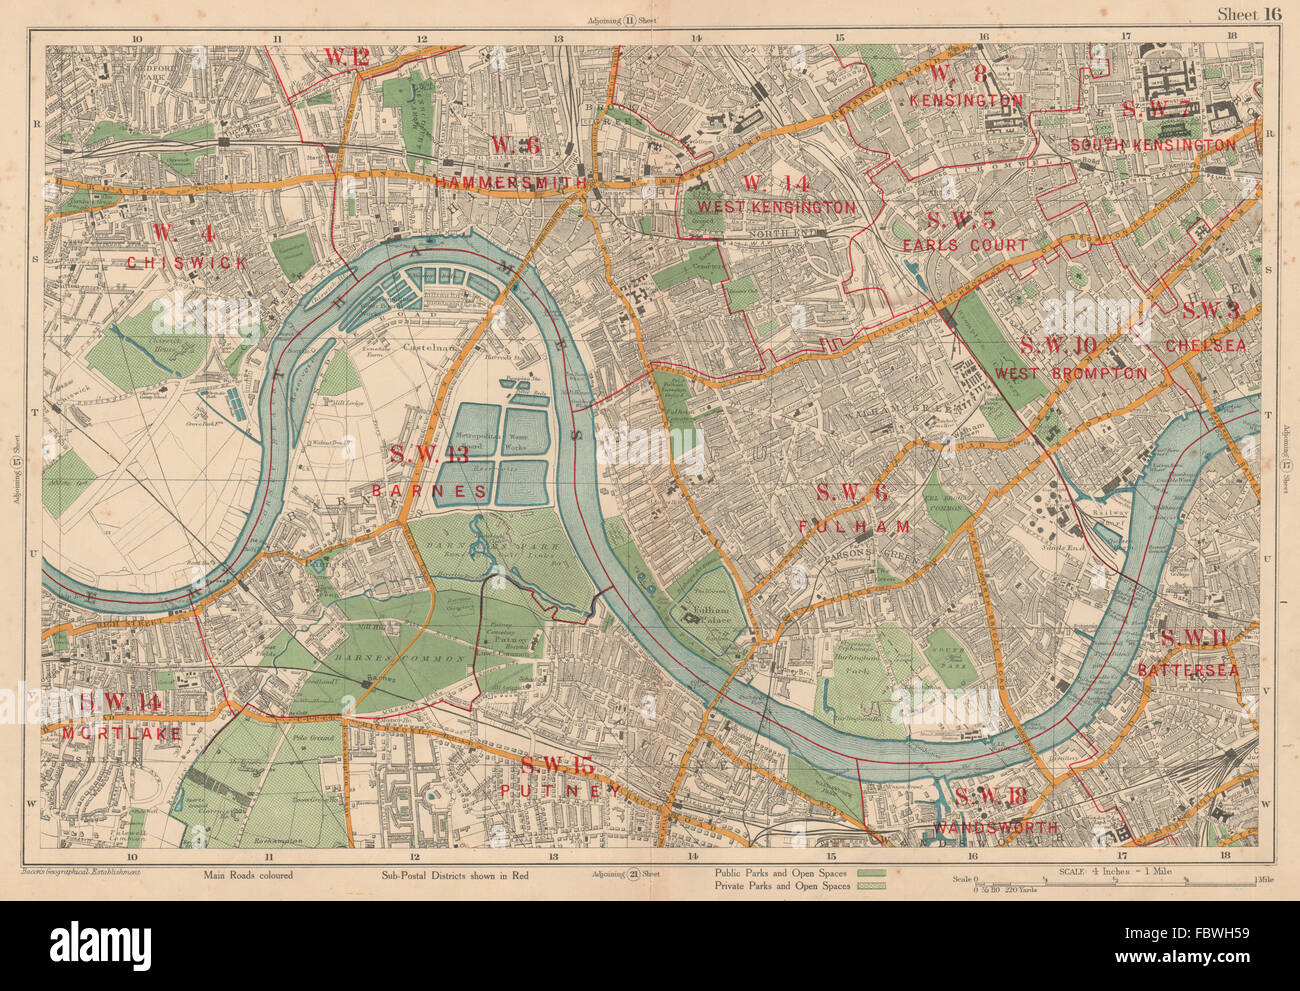 HAMMERSMITH FULHAM Chiswick Kensington Chelsea Barnes Putney. BACON, 1927 map Stock Photo